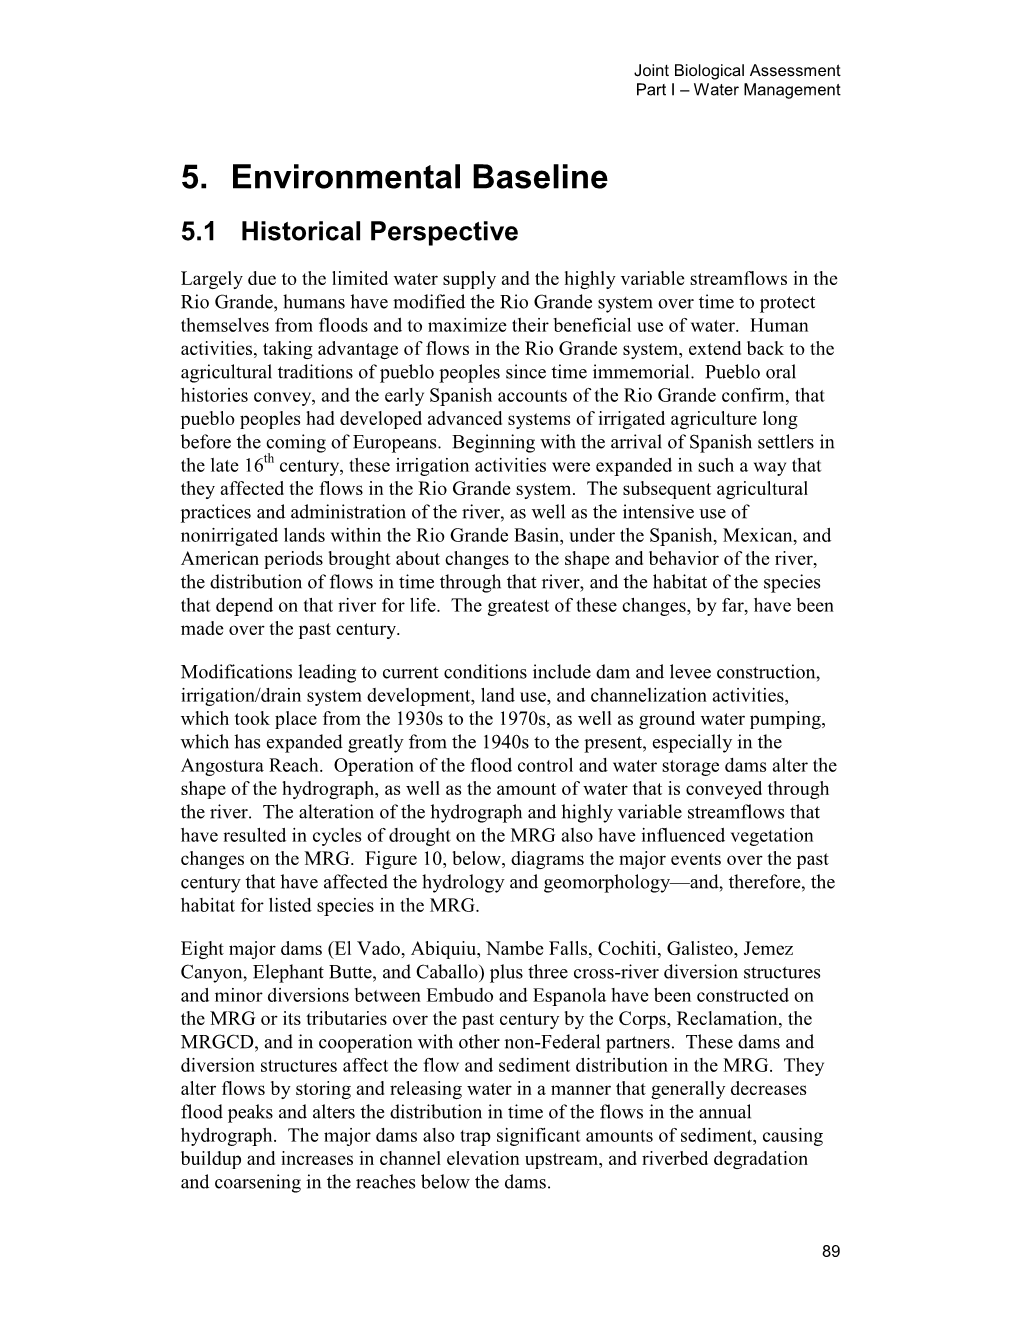 5. Environmental Baseline 5.1 Historical Perspective